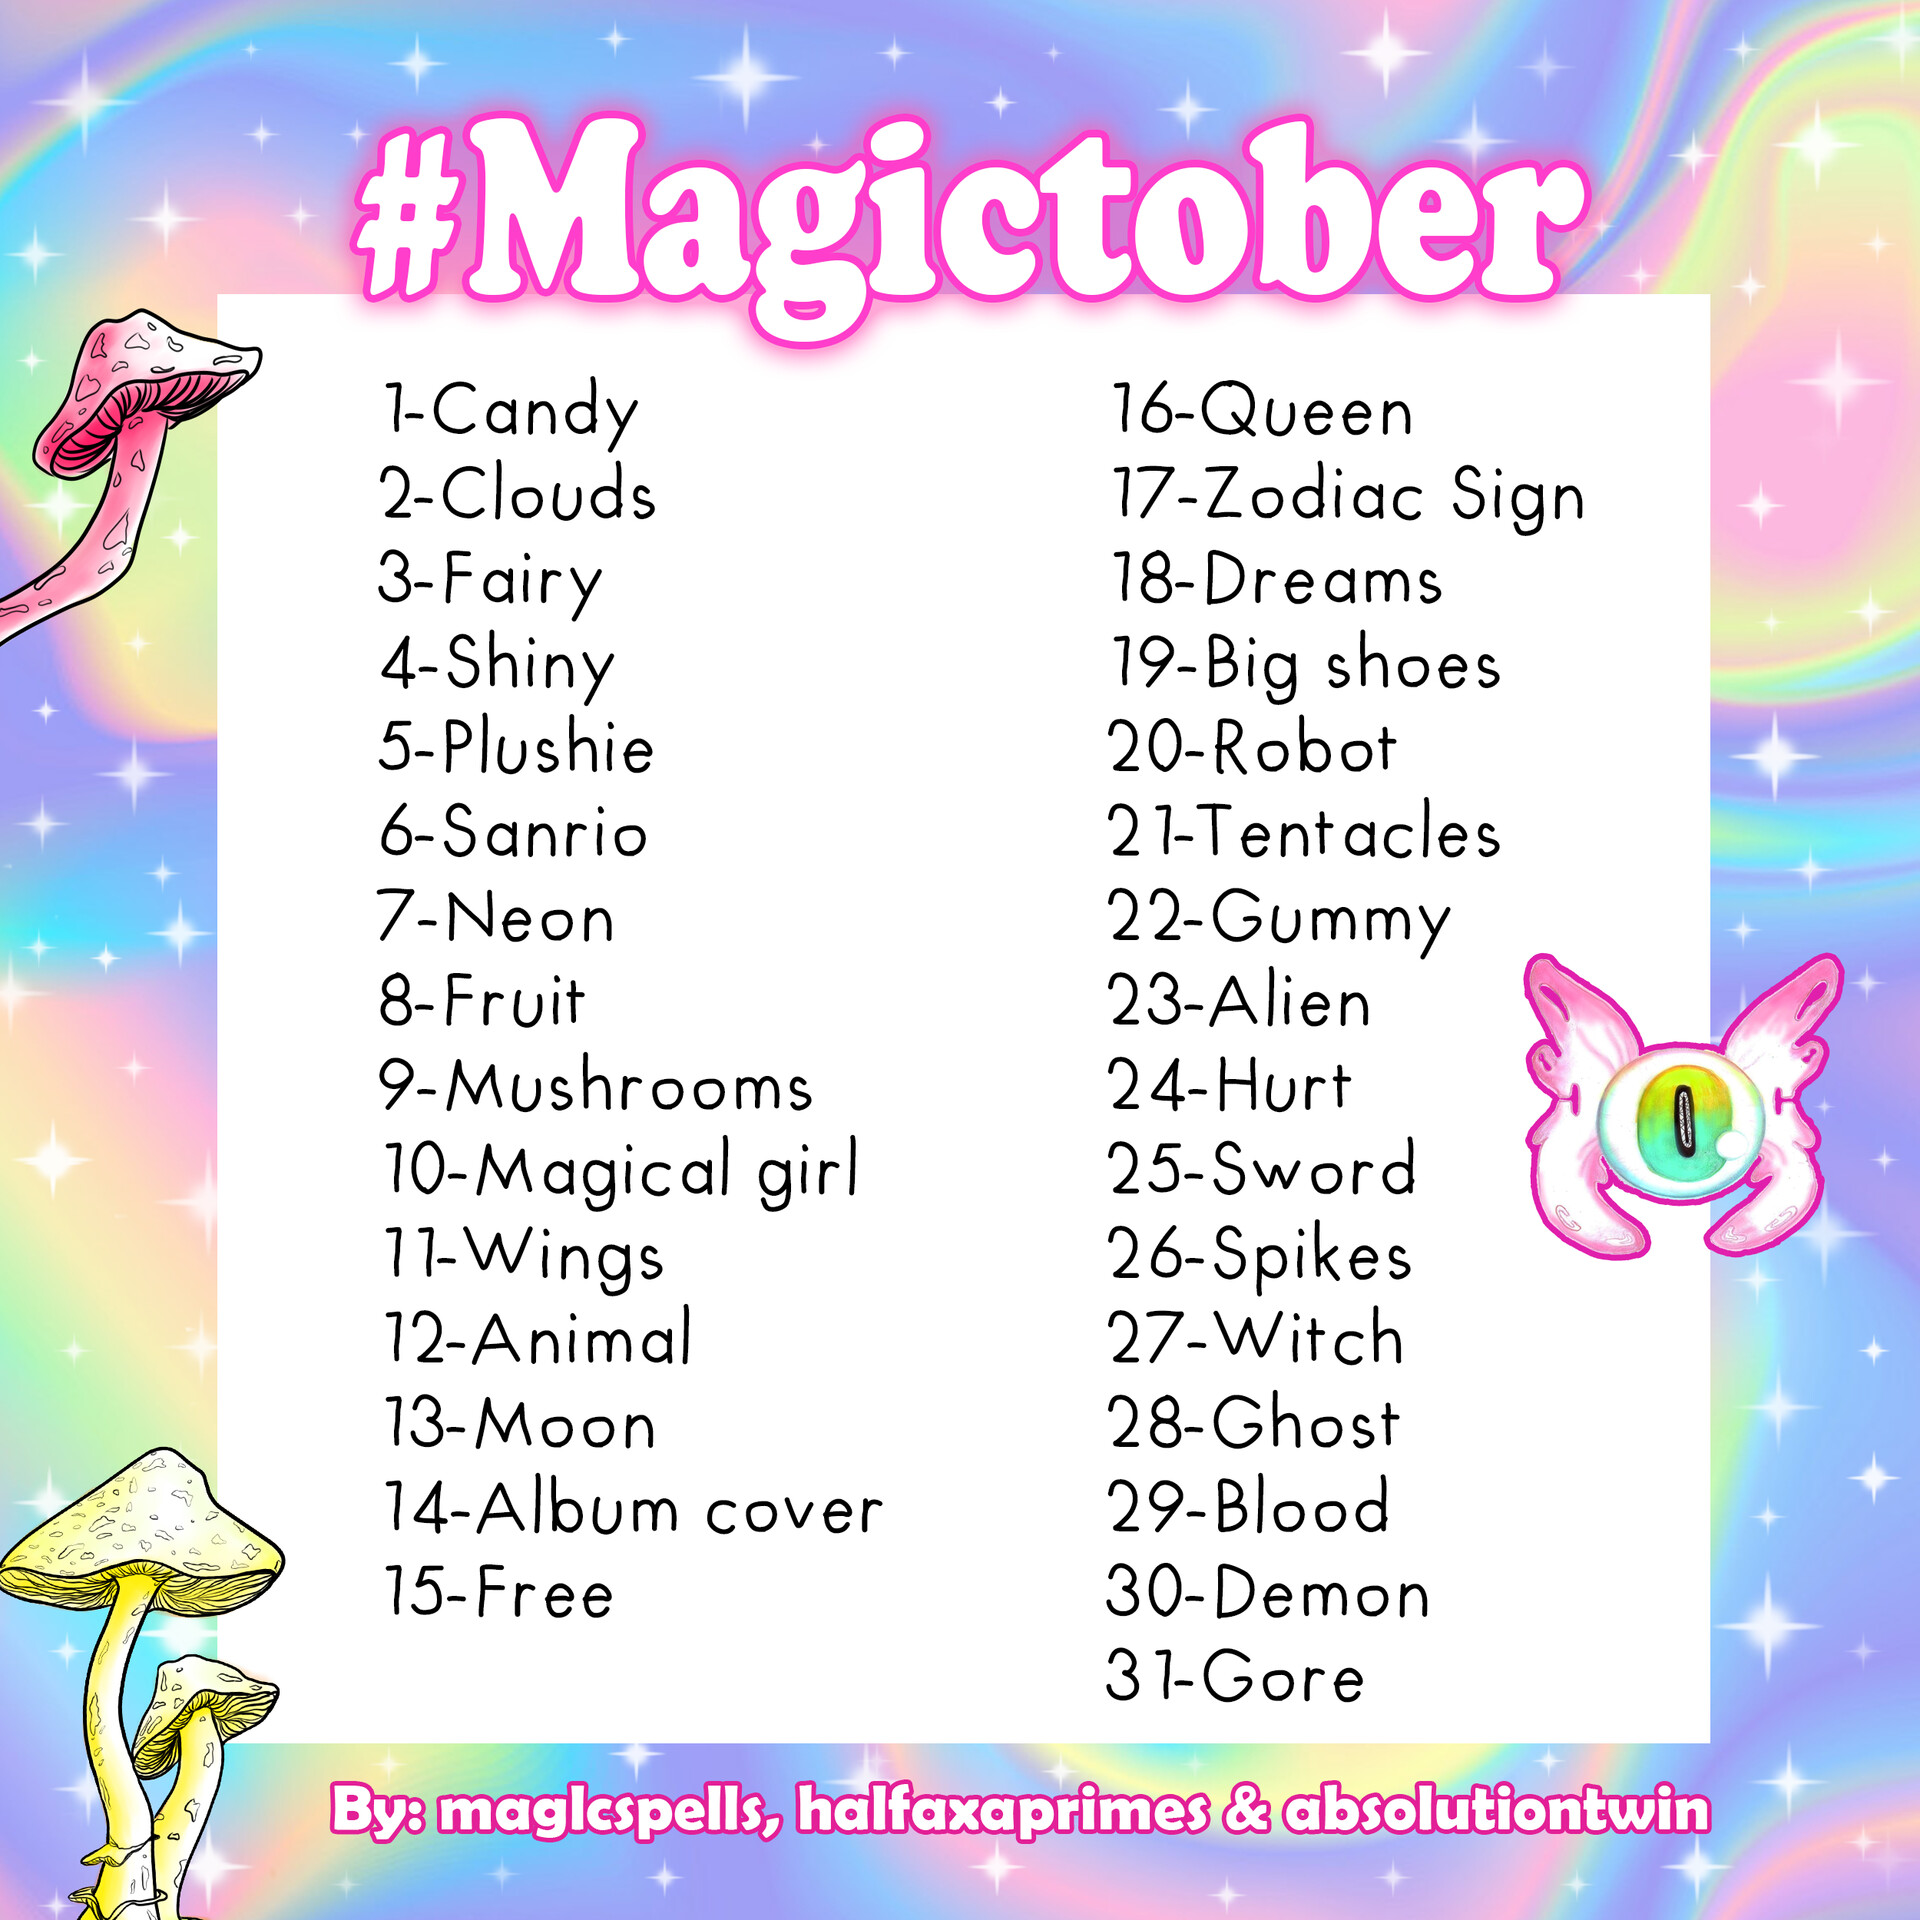 Maglc Spells - Fairy | Magictober 2020 Day 3